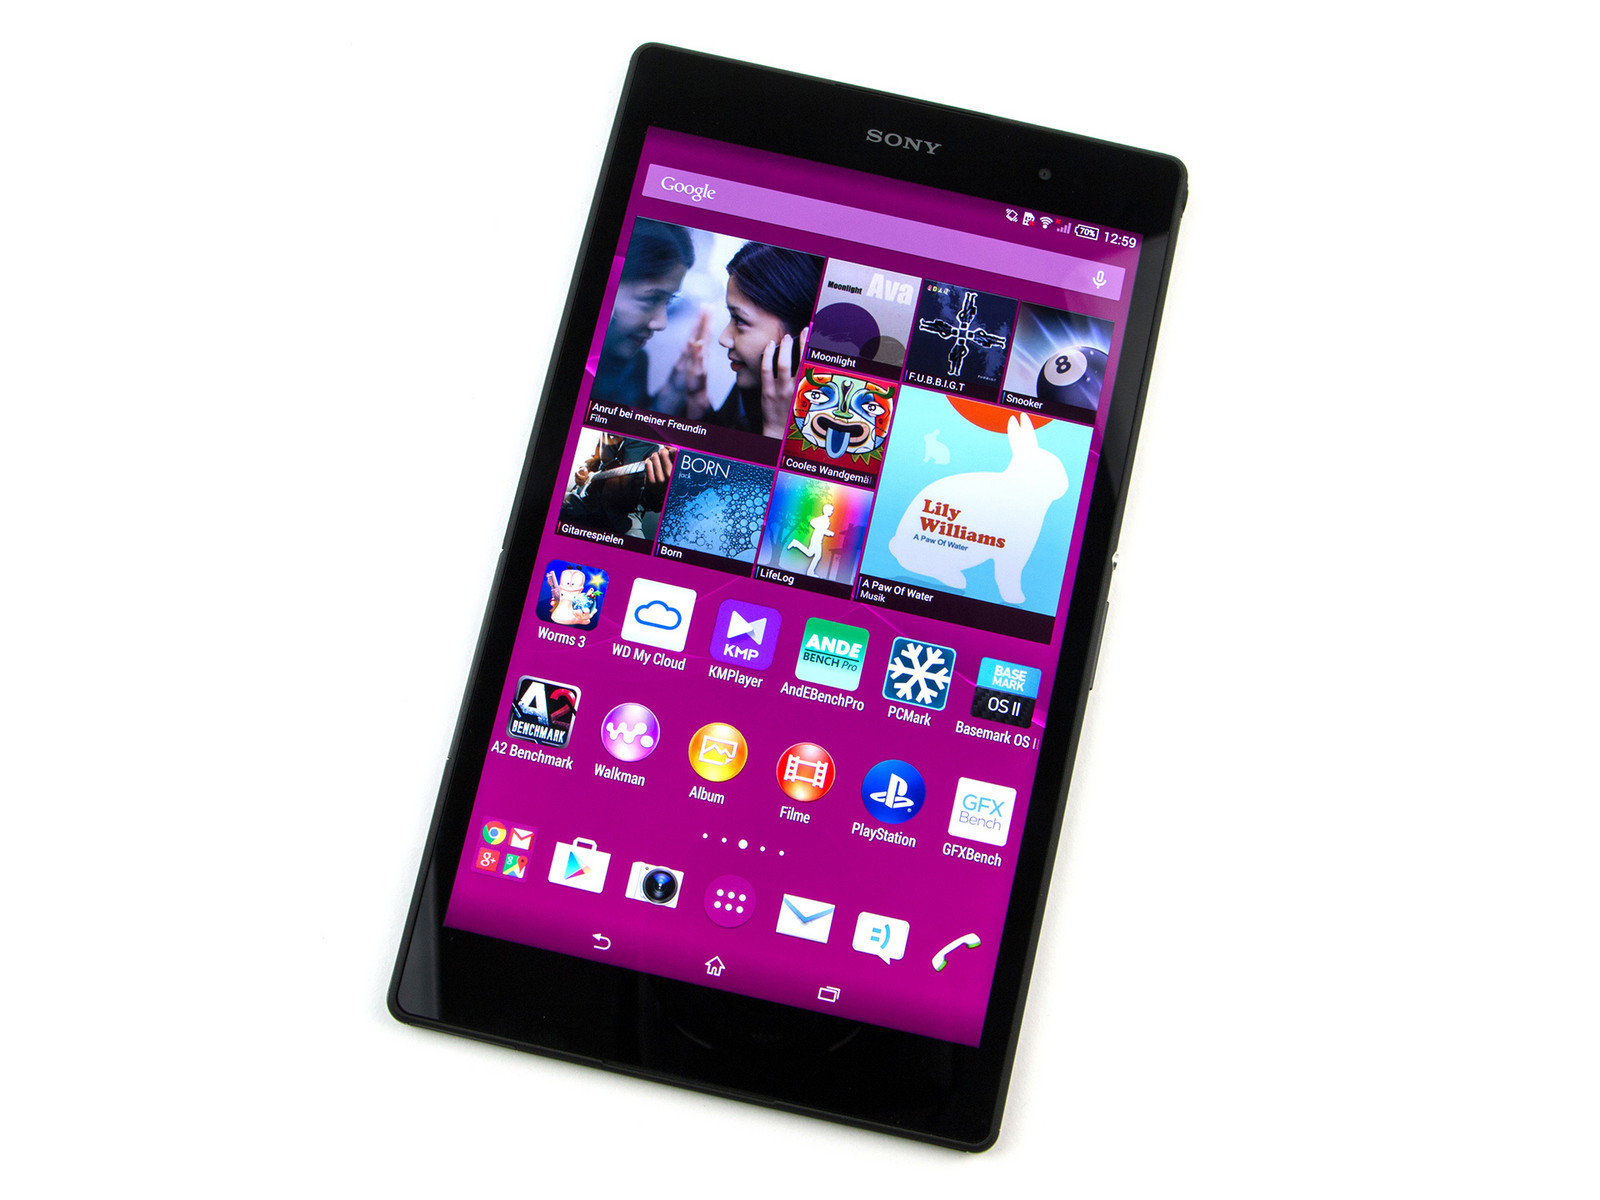 Valkuilen fluit Besnoeiing Sony Xperia Z3 Tablet Compact - Notebookcheck.net External Reviews